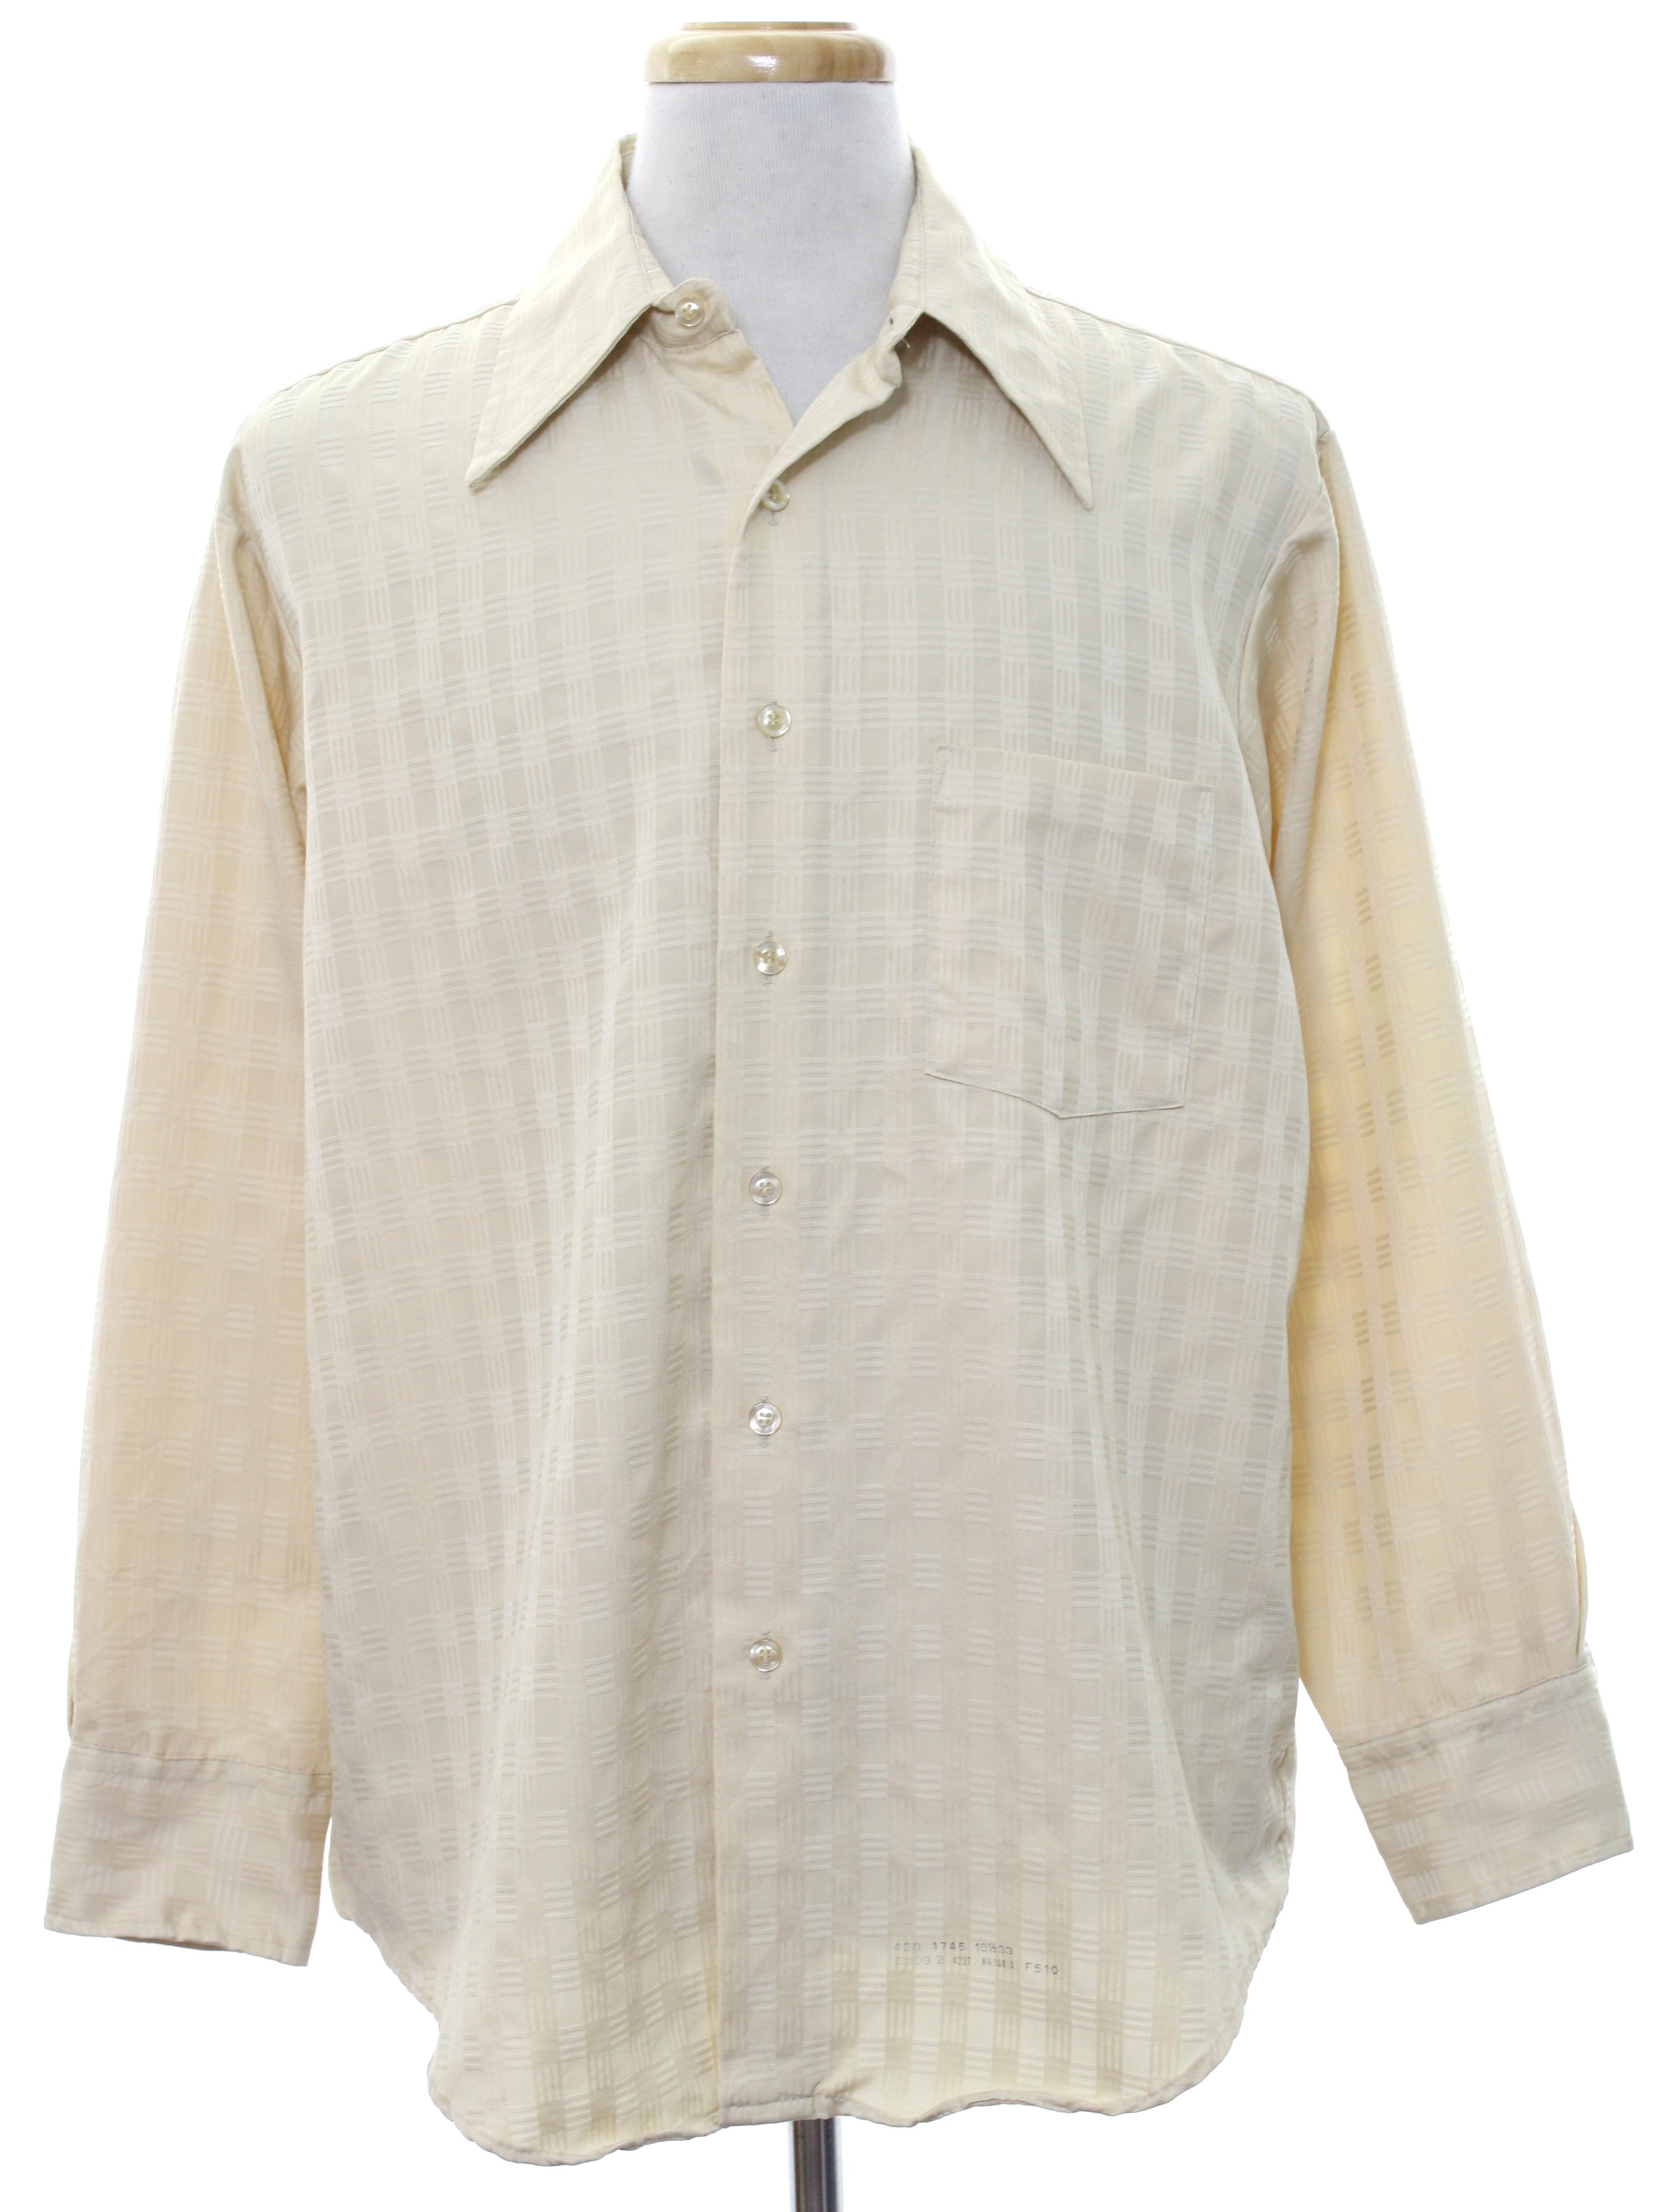 JC Penney Ultressa 1970s Vintage Shirt: 70s -JC Penney Ultressa- Mens ...